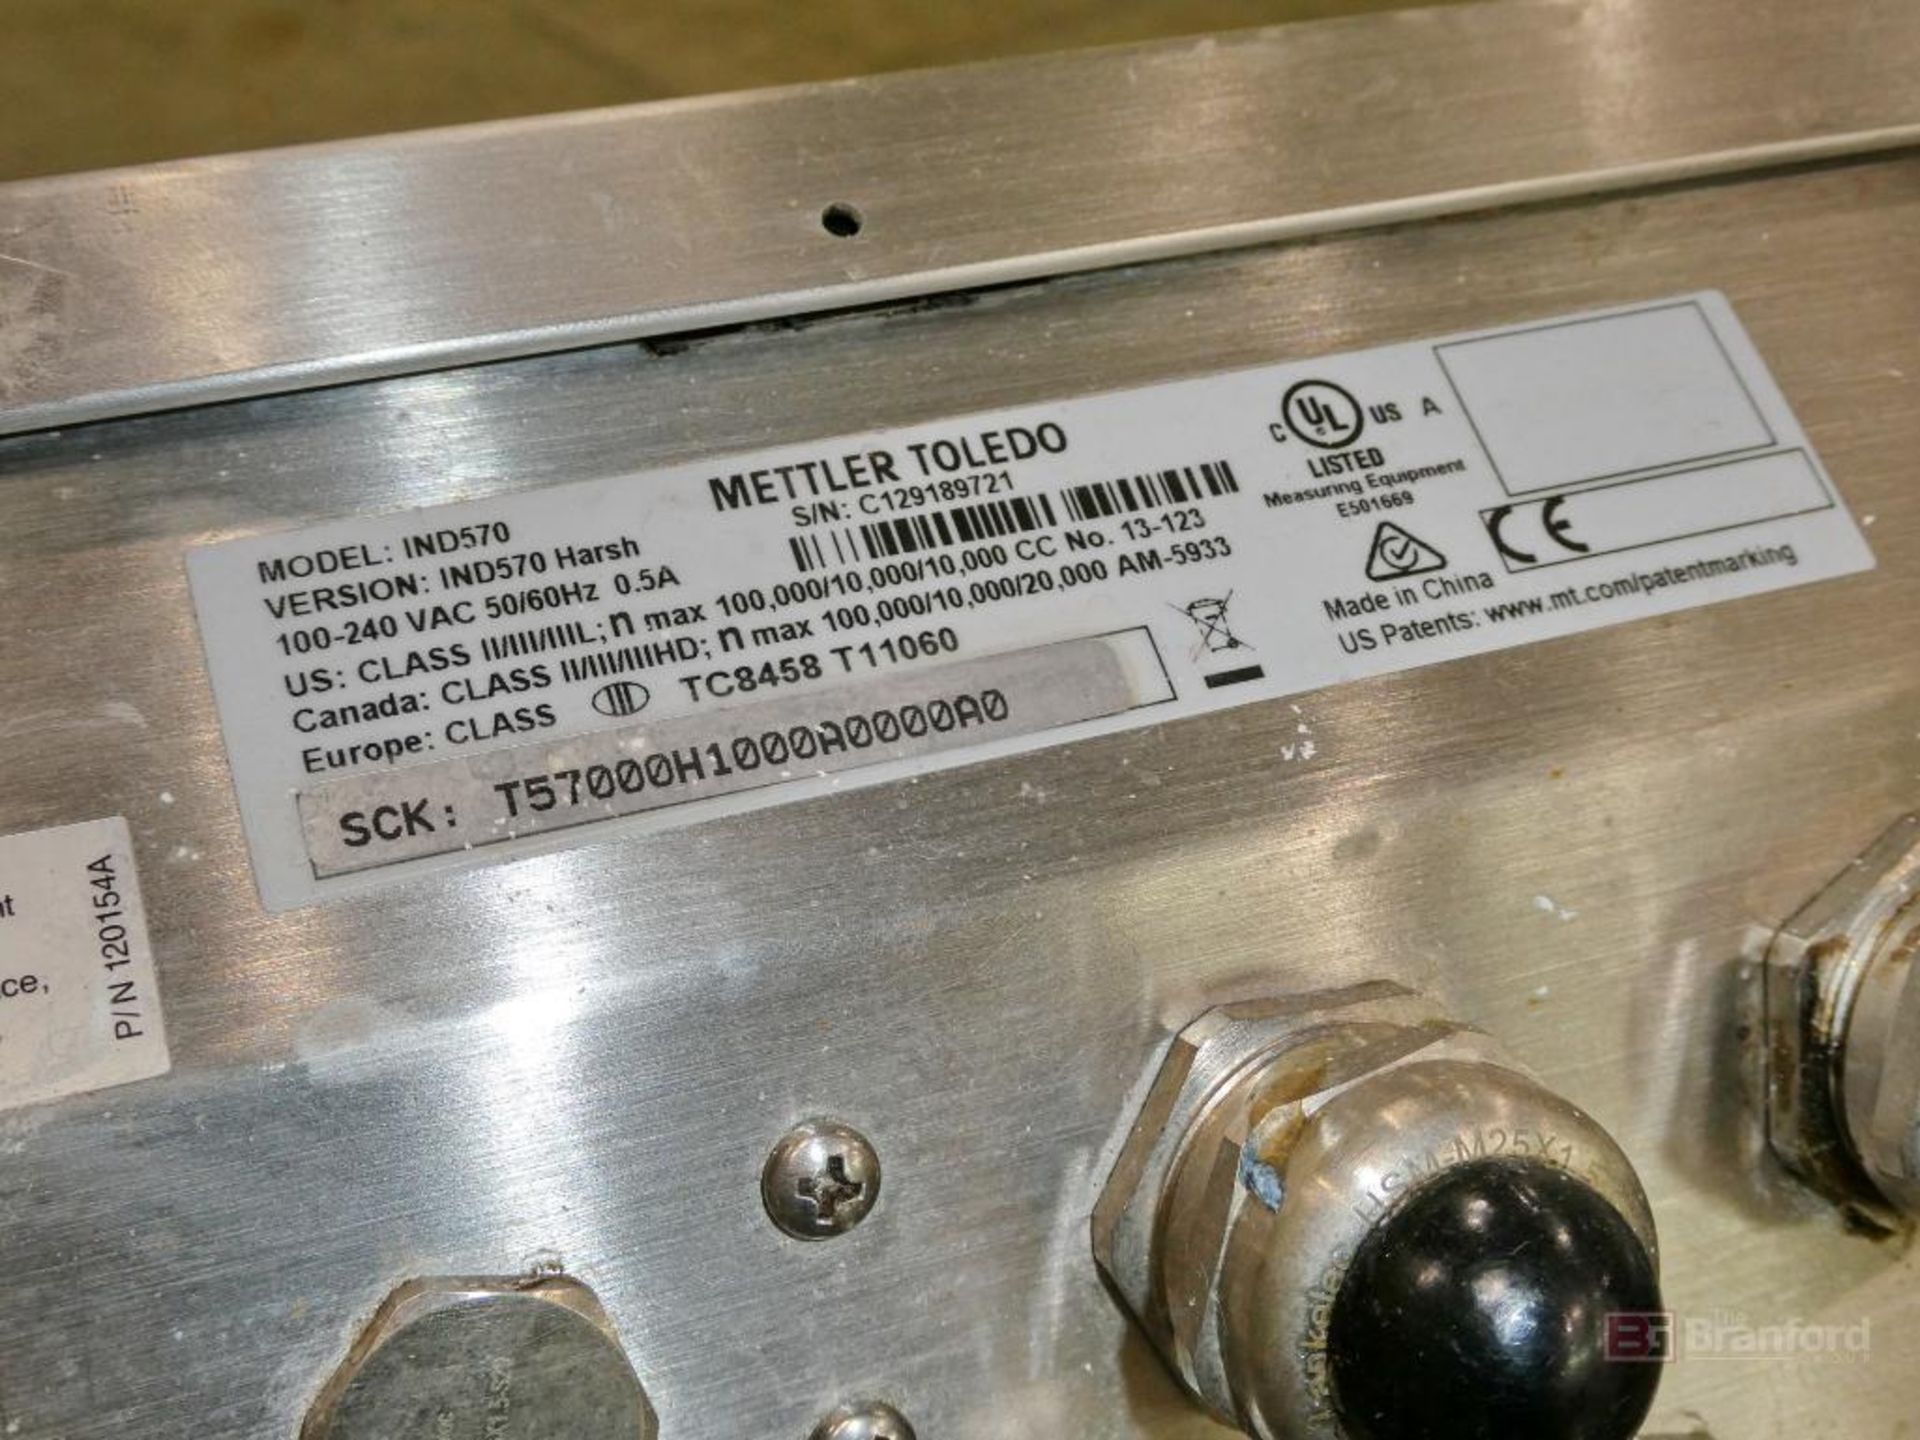 Mettler-Toledo Model IND570, Stainless Steel Digital Weight Scale - Image 4 of 4